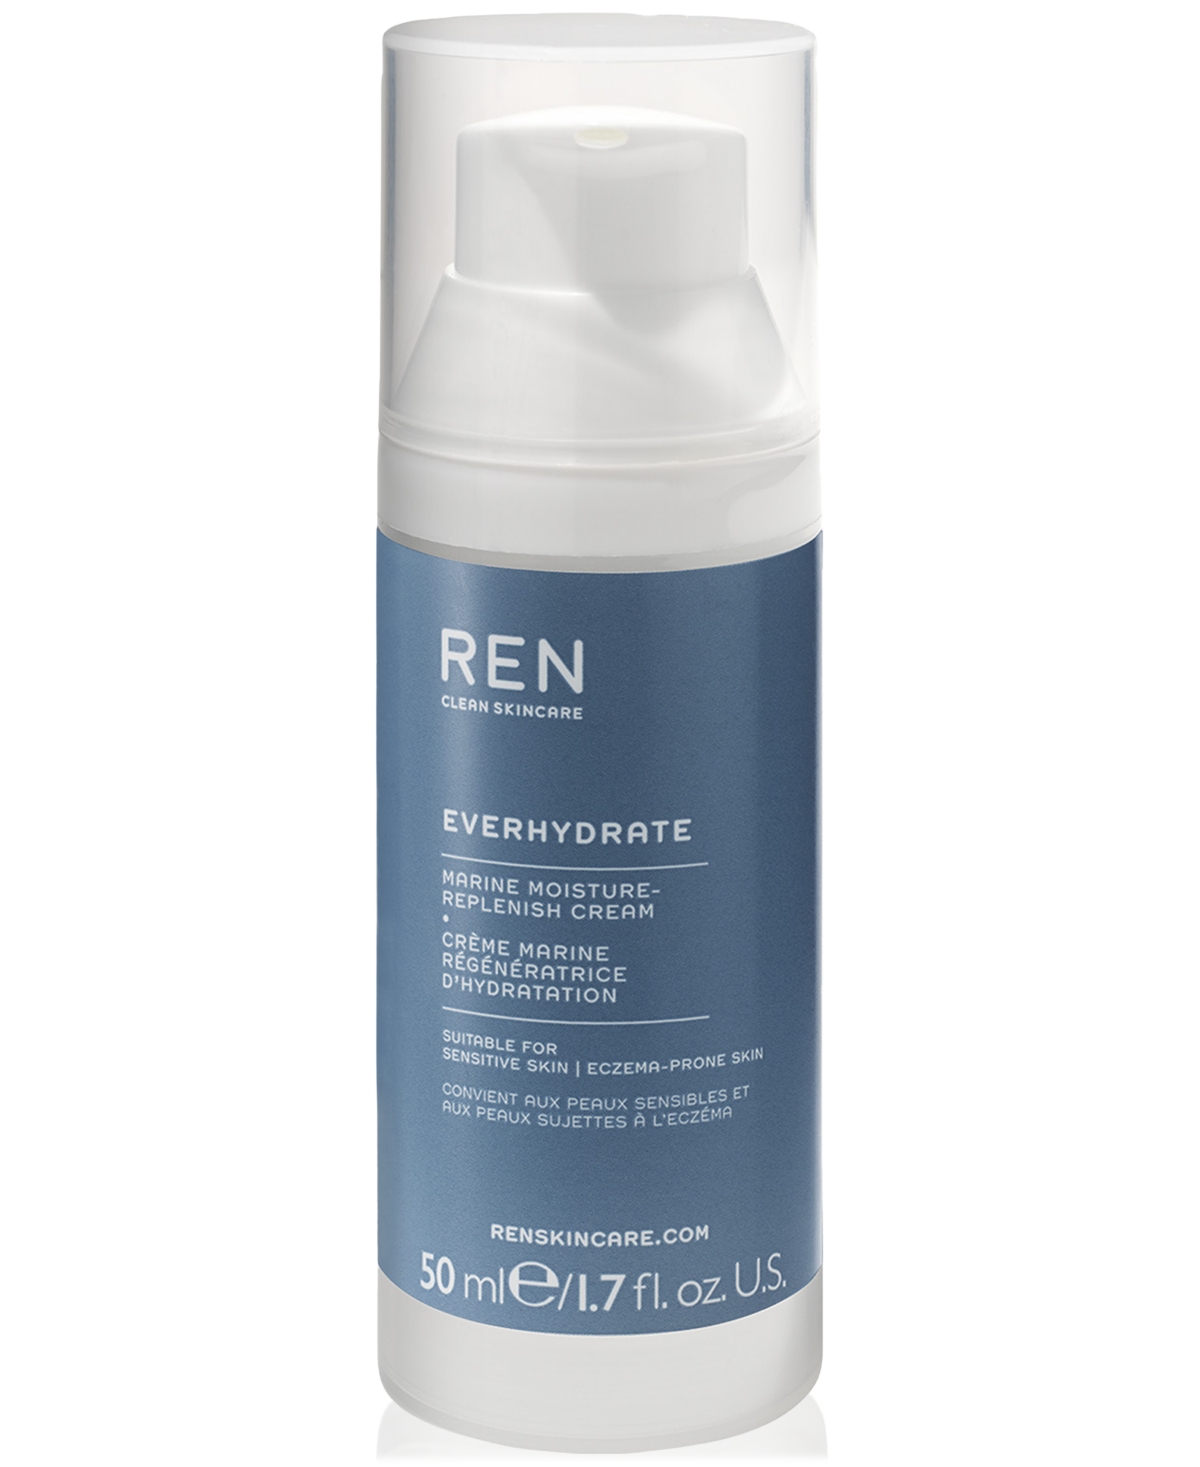 Ren Clean Skincare Everhydrate Marine Moisture-replenish Cream, 1.7 Oz.